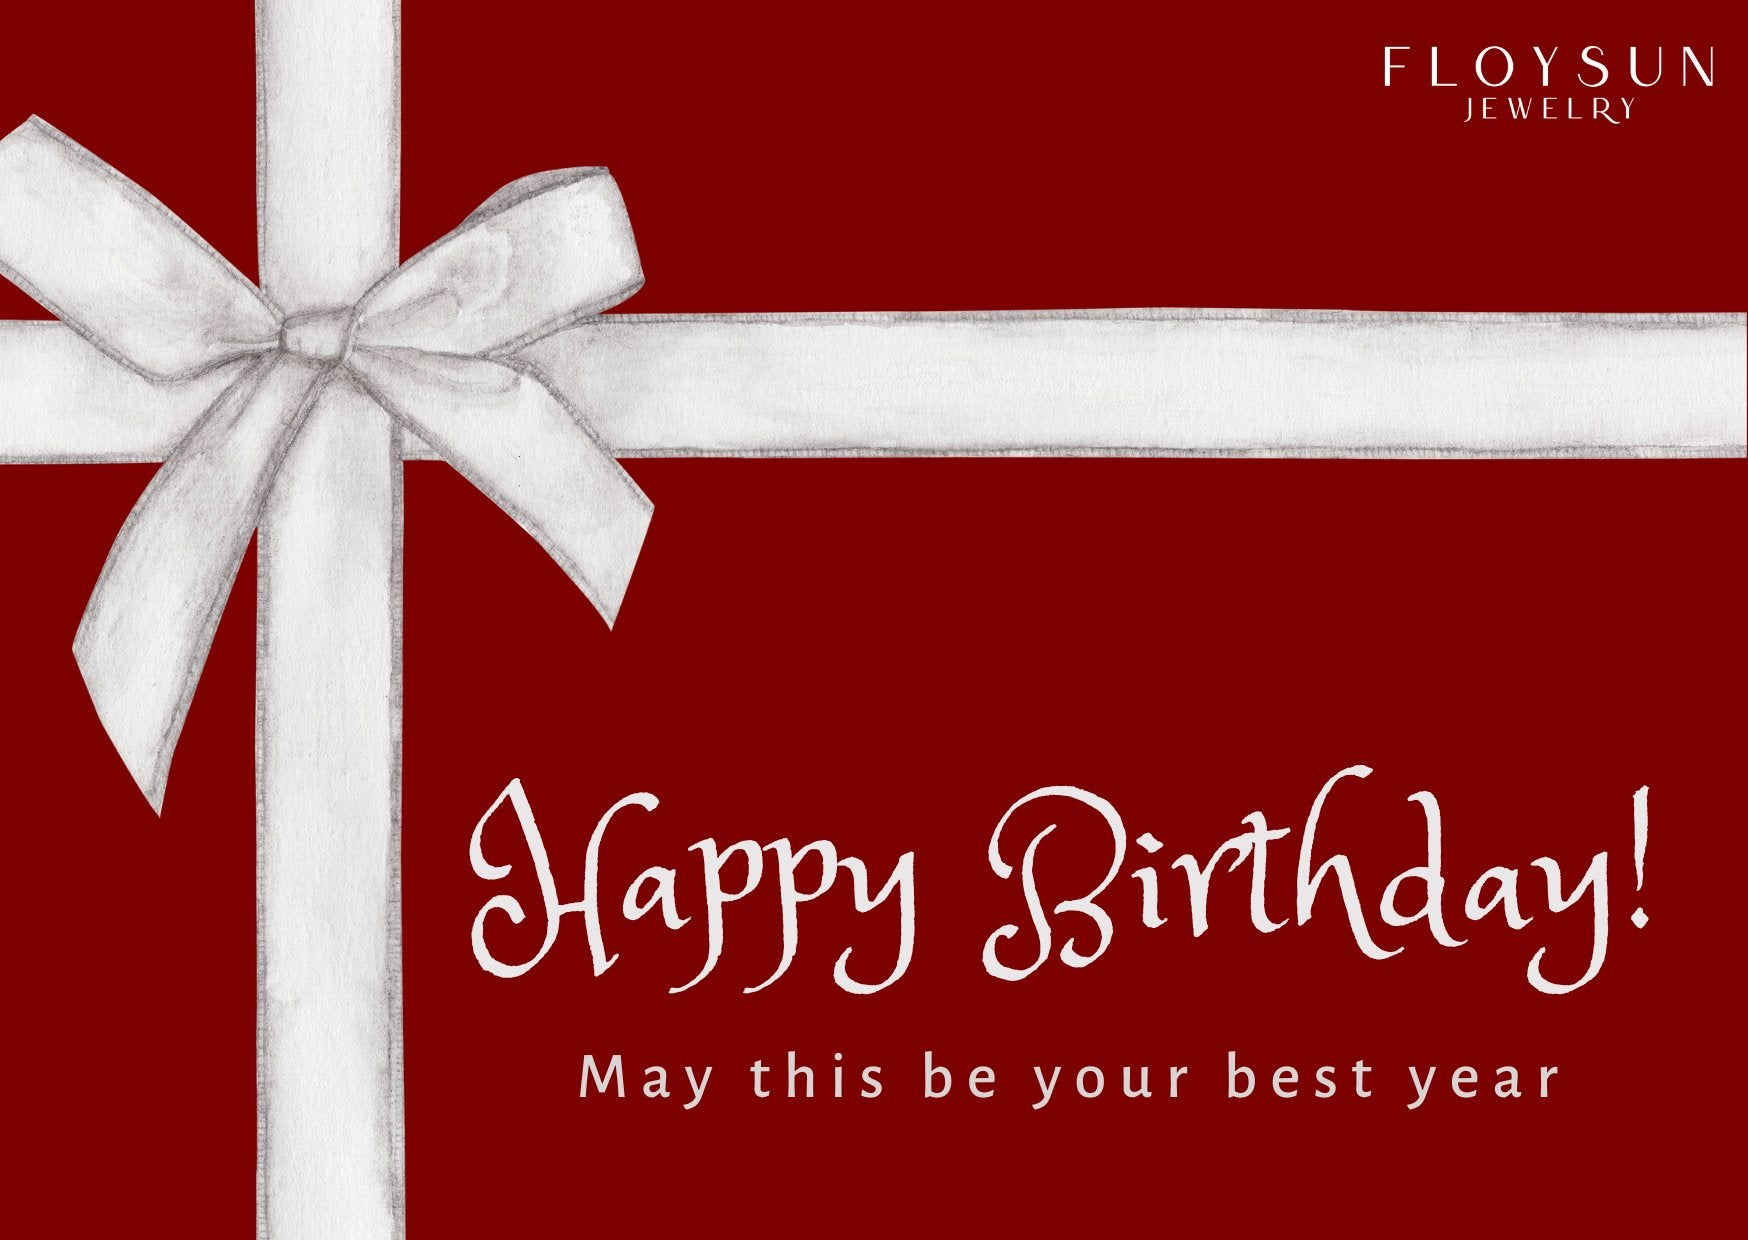 Floysun Gifts Card - floysun